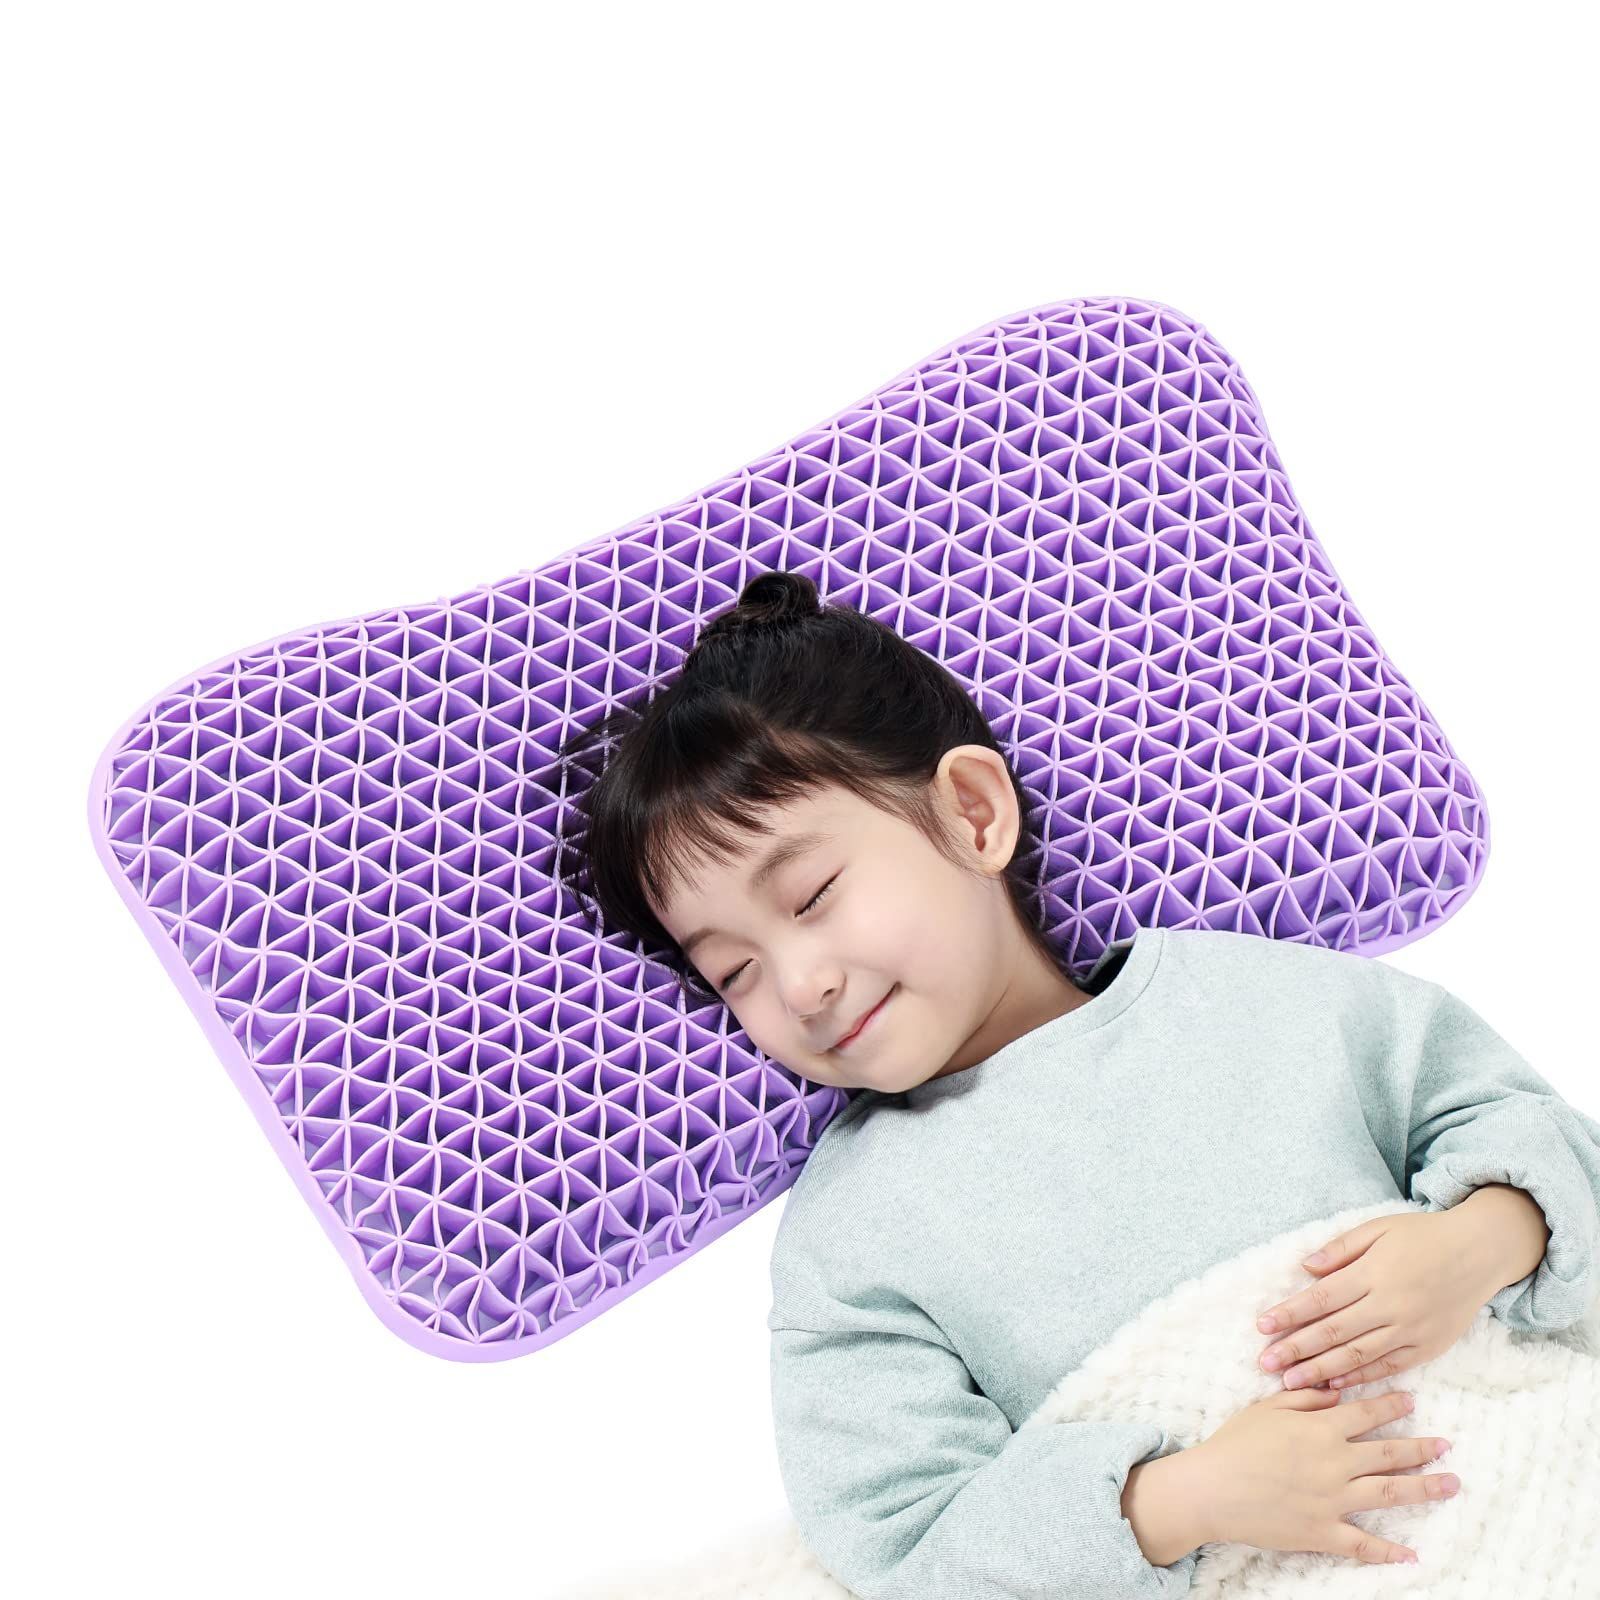 OUTLET 包装 即日発送 代引無料 Dafeel 枕(4.5/6cm)低めハニカム枕